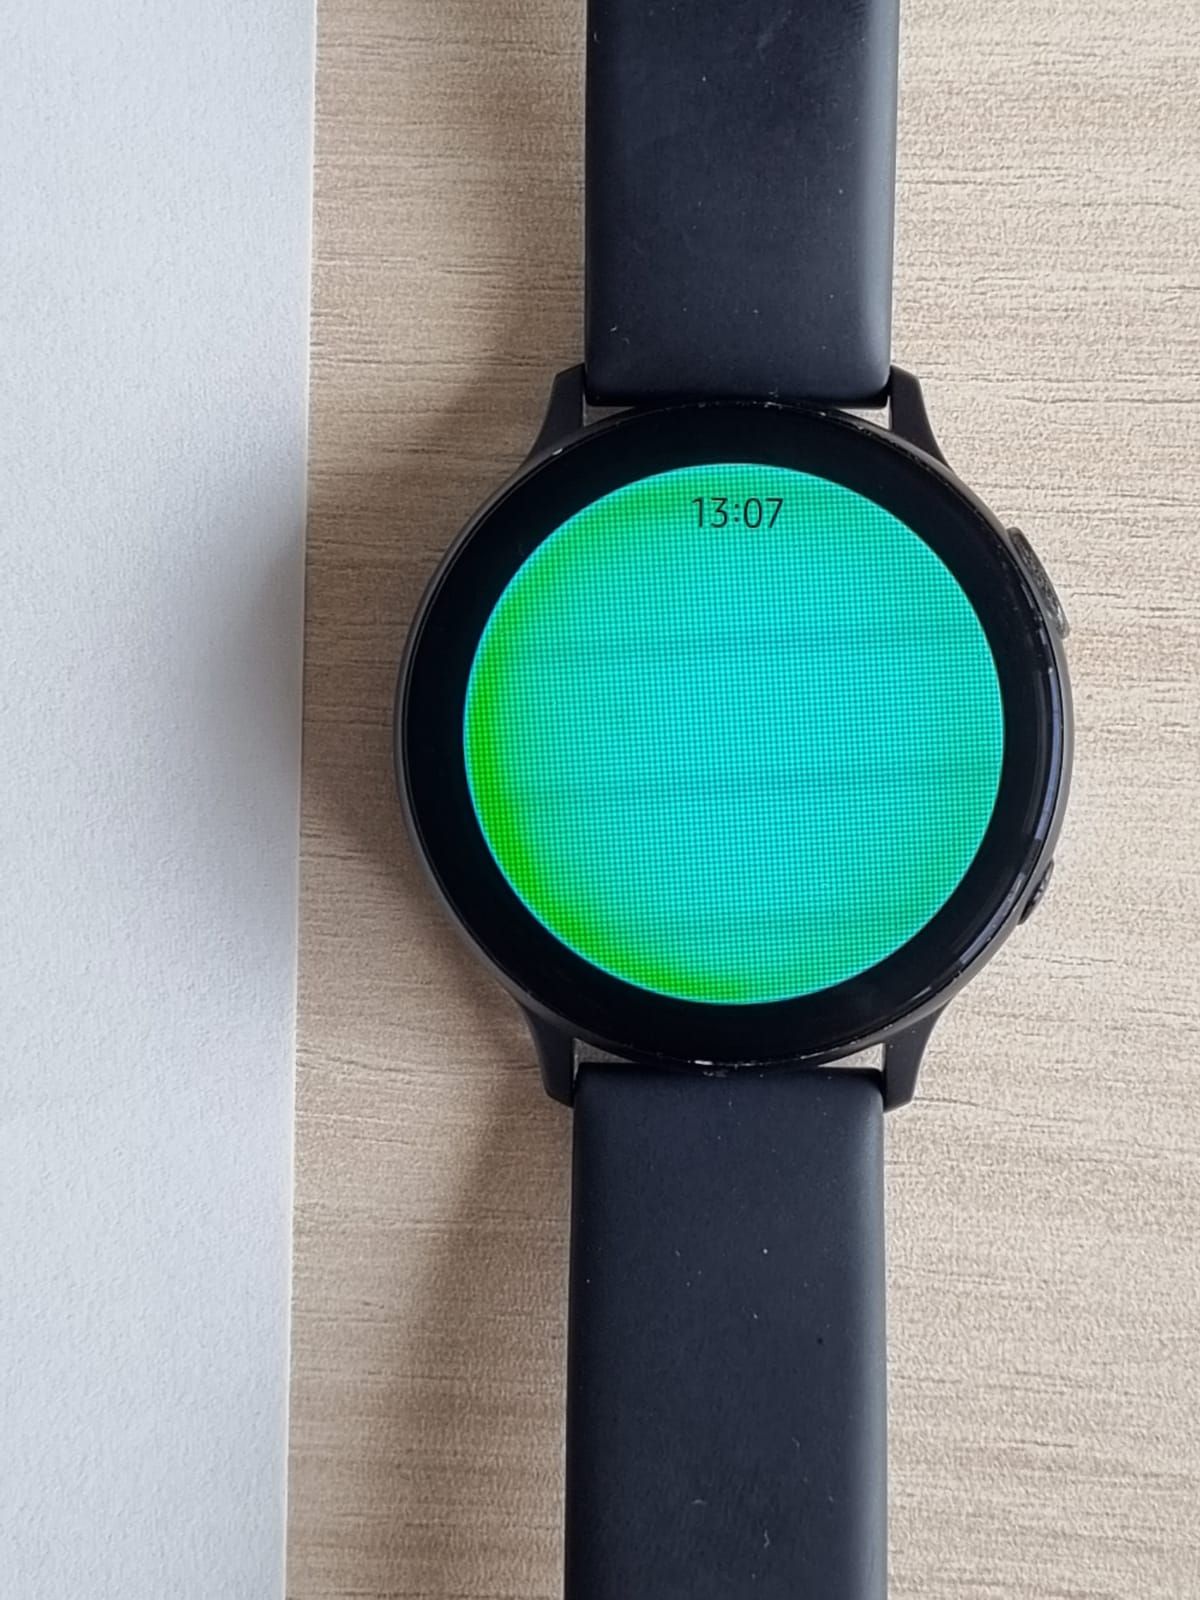 Samsung Galaxy Watch Active 2 - Display shows green/bluish color error -  Samsung Community